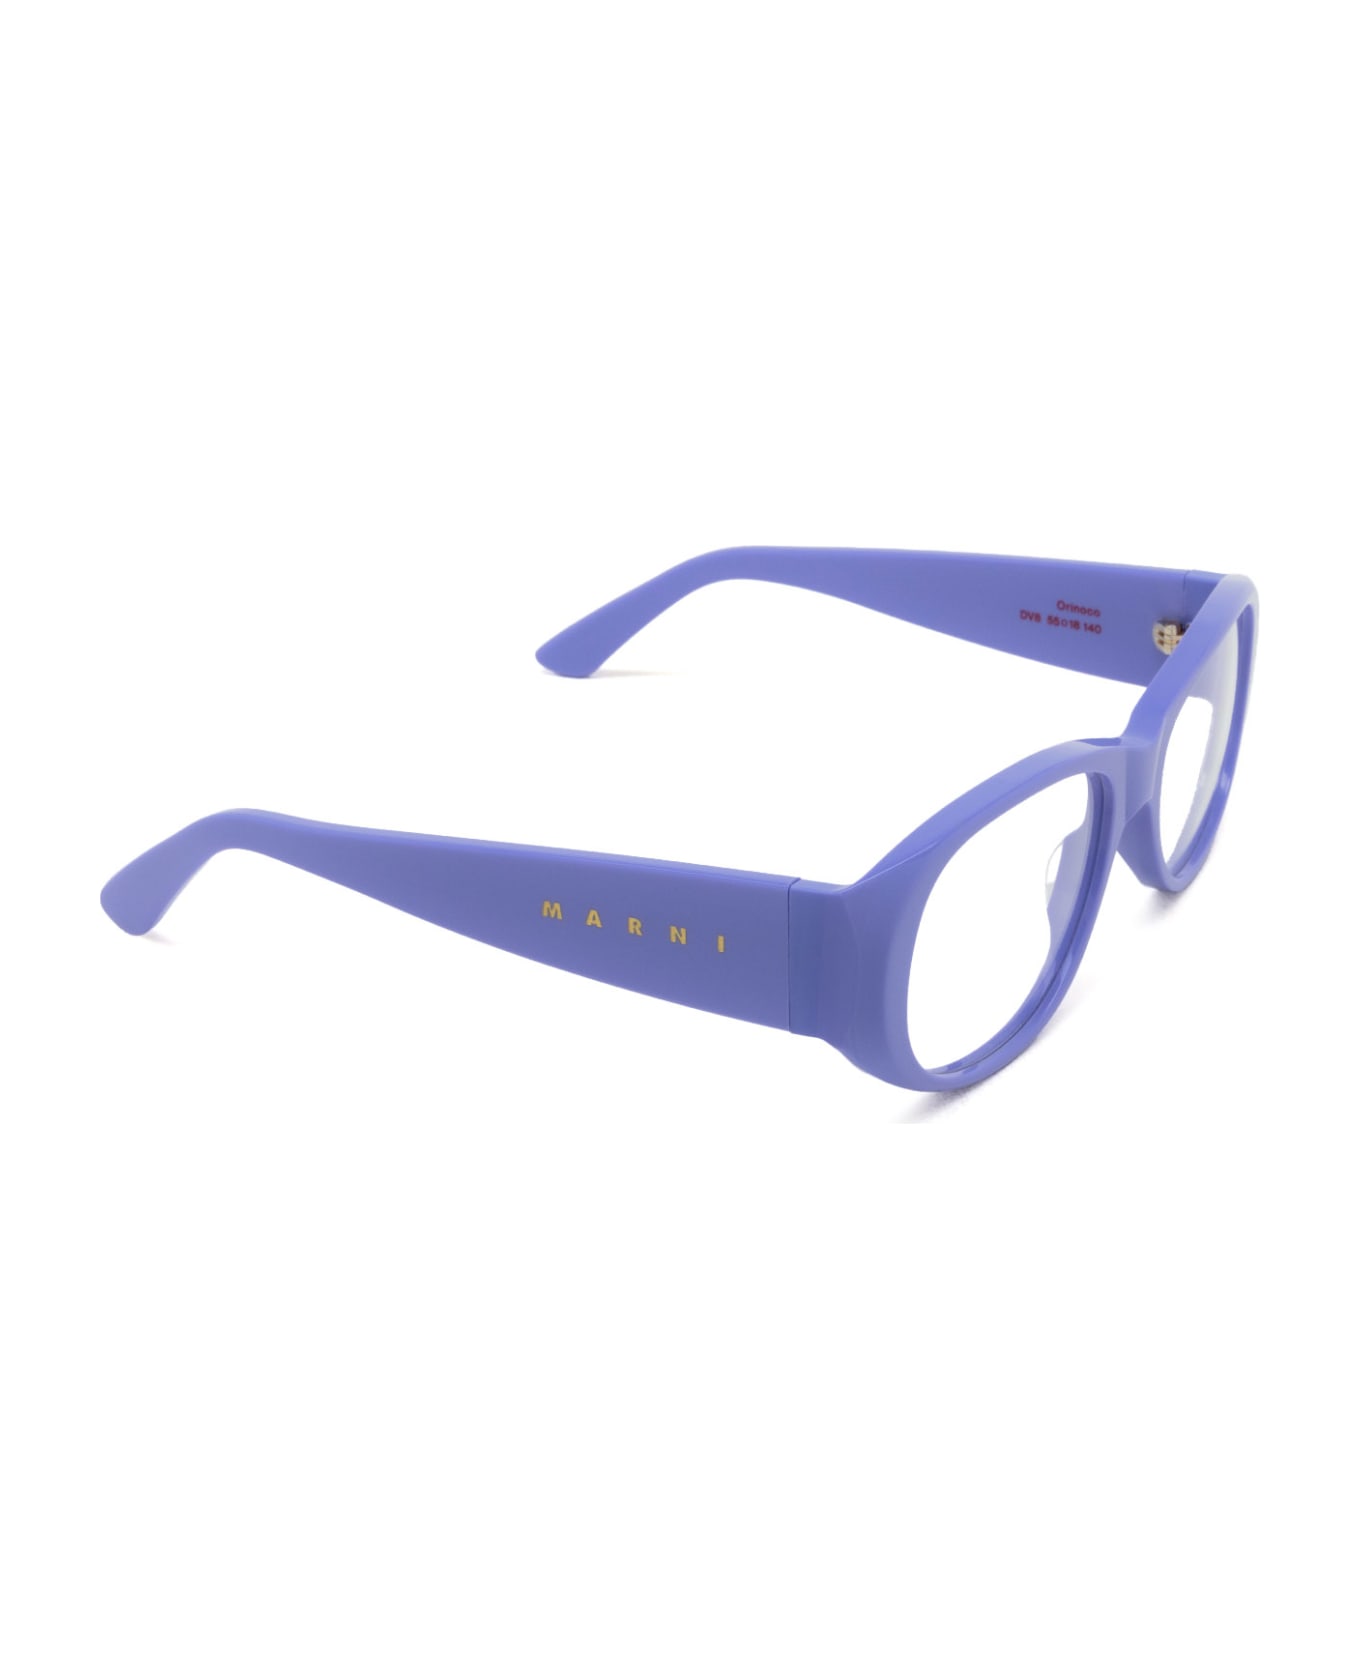 Marni Eyewear Orinoco Optical Lilac Glasses - Lilac アイウェア